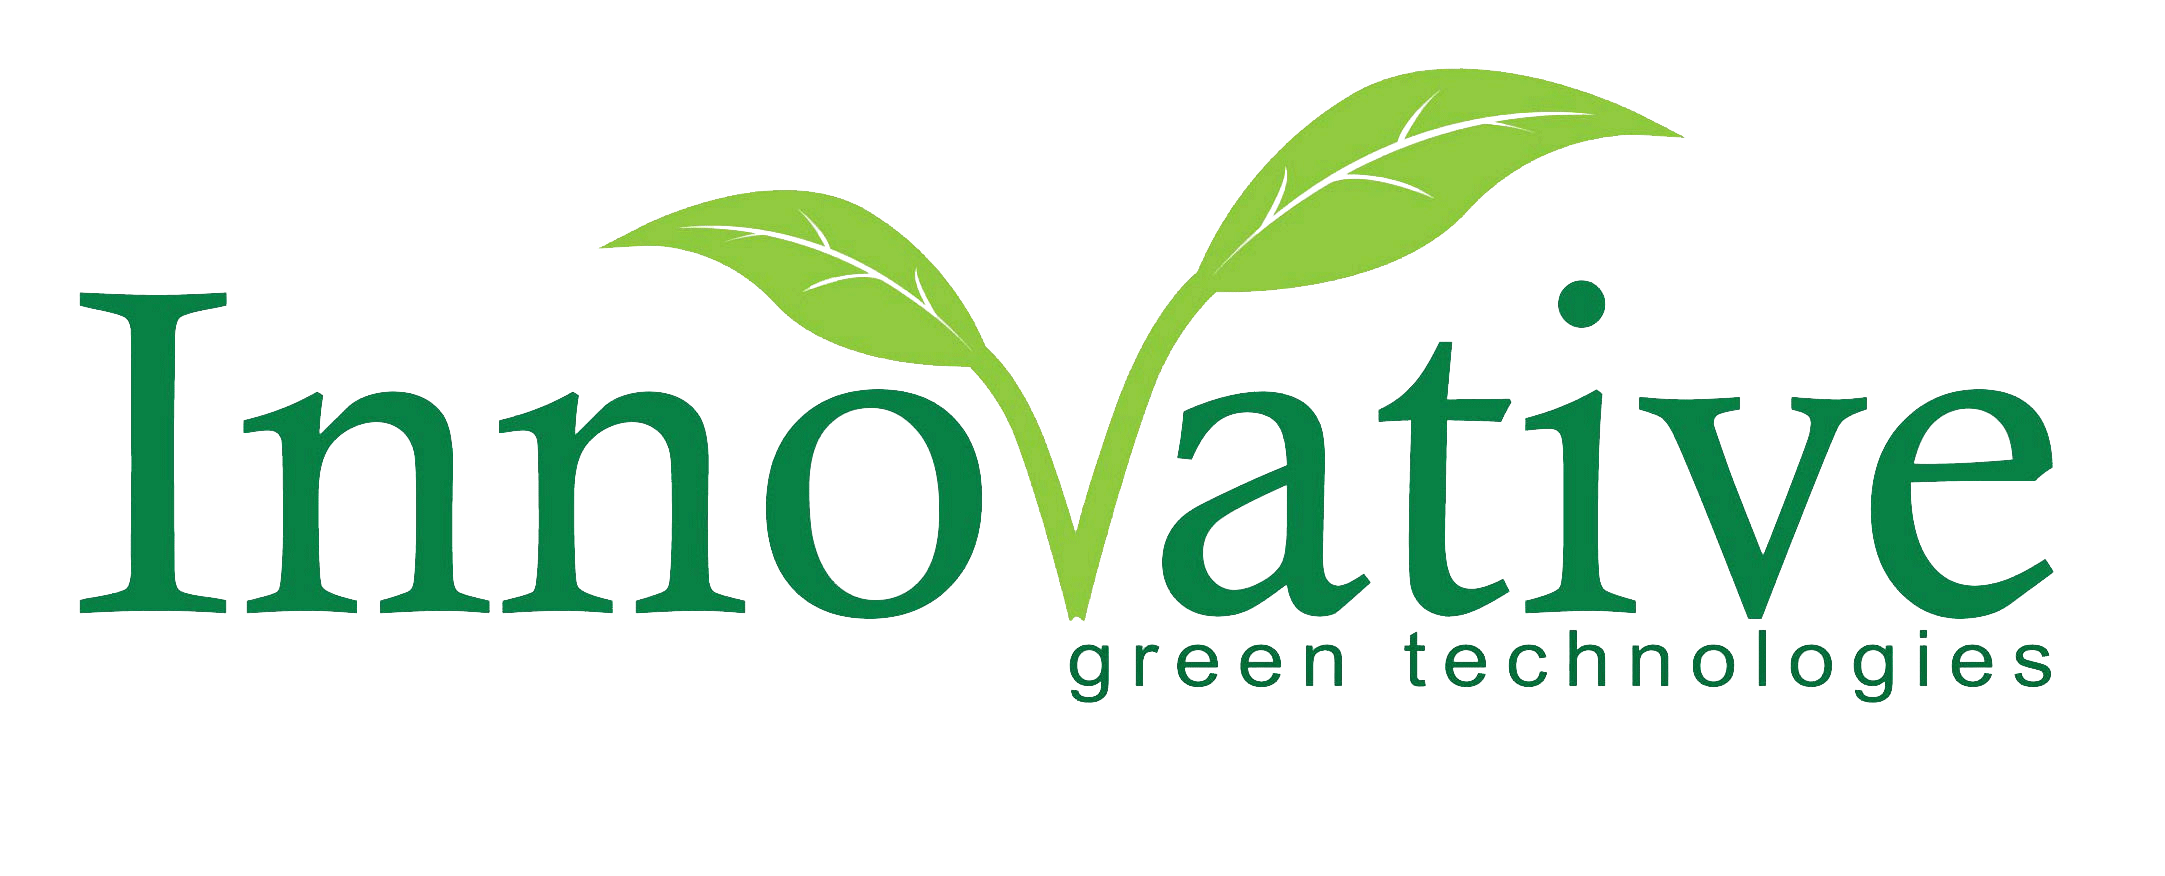 Green Technology Logo - Innovative Green Technologies